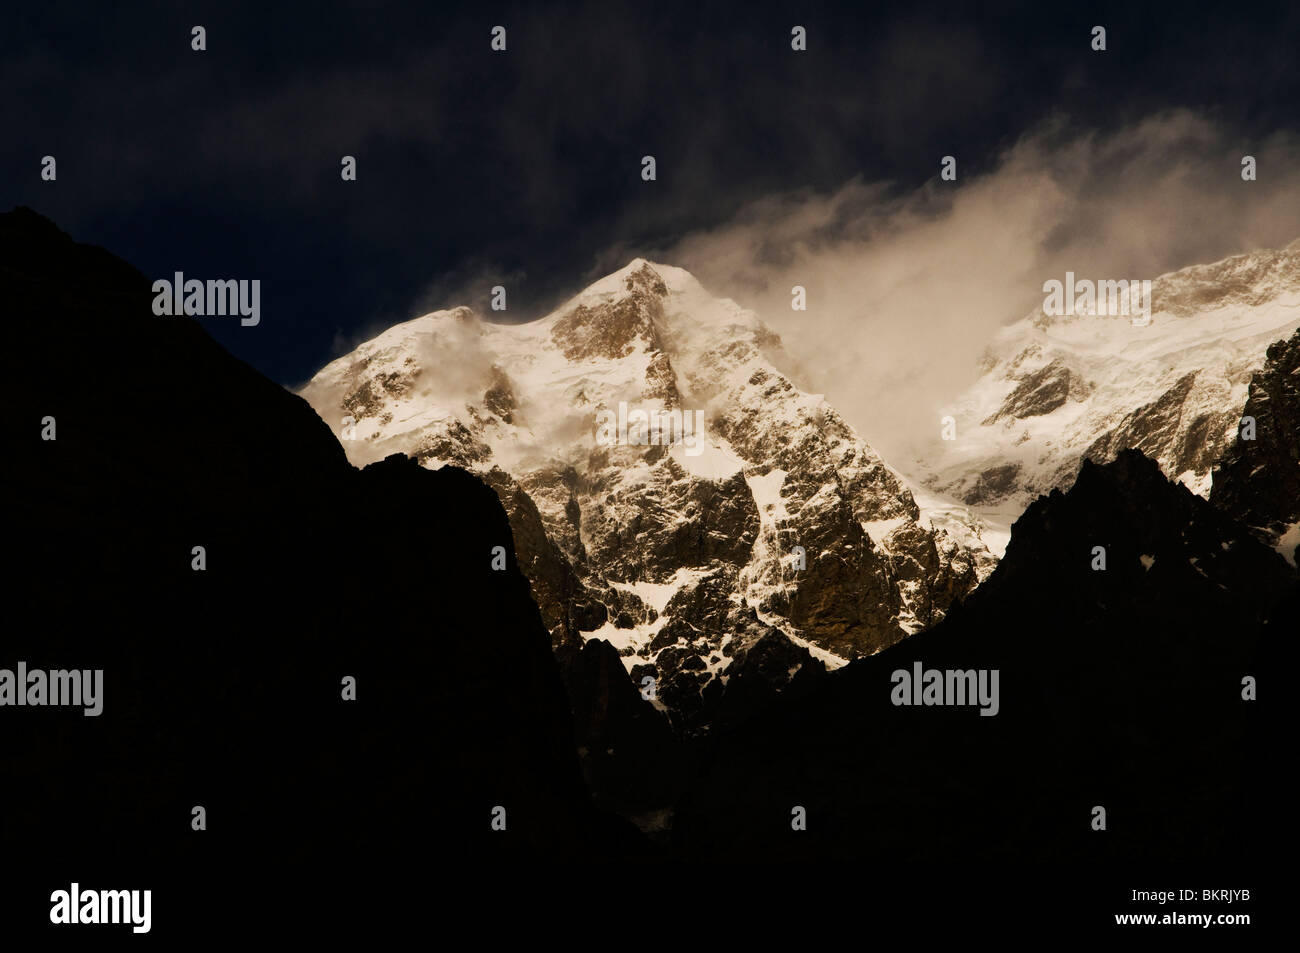 Ultar Sar peak is the south easternmost major peak of the Batura Muztagh, a subrange of the Karakoram  range in Pakistan. Stock Photo